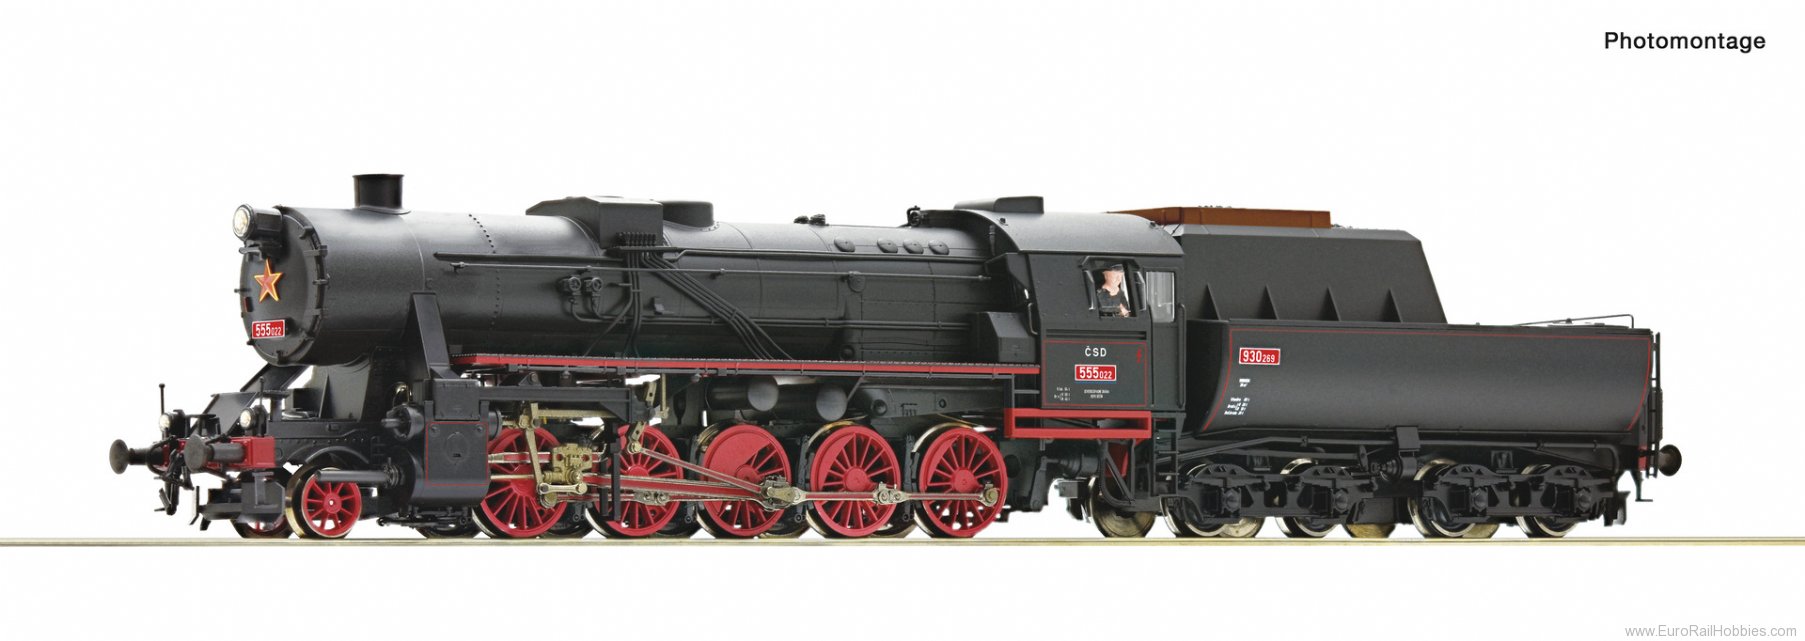 Roco 7110001 Steam locomotive class 555.0, CSD (Digital So